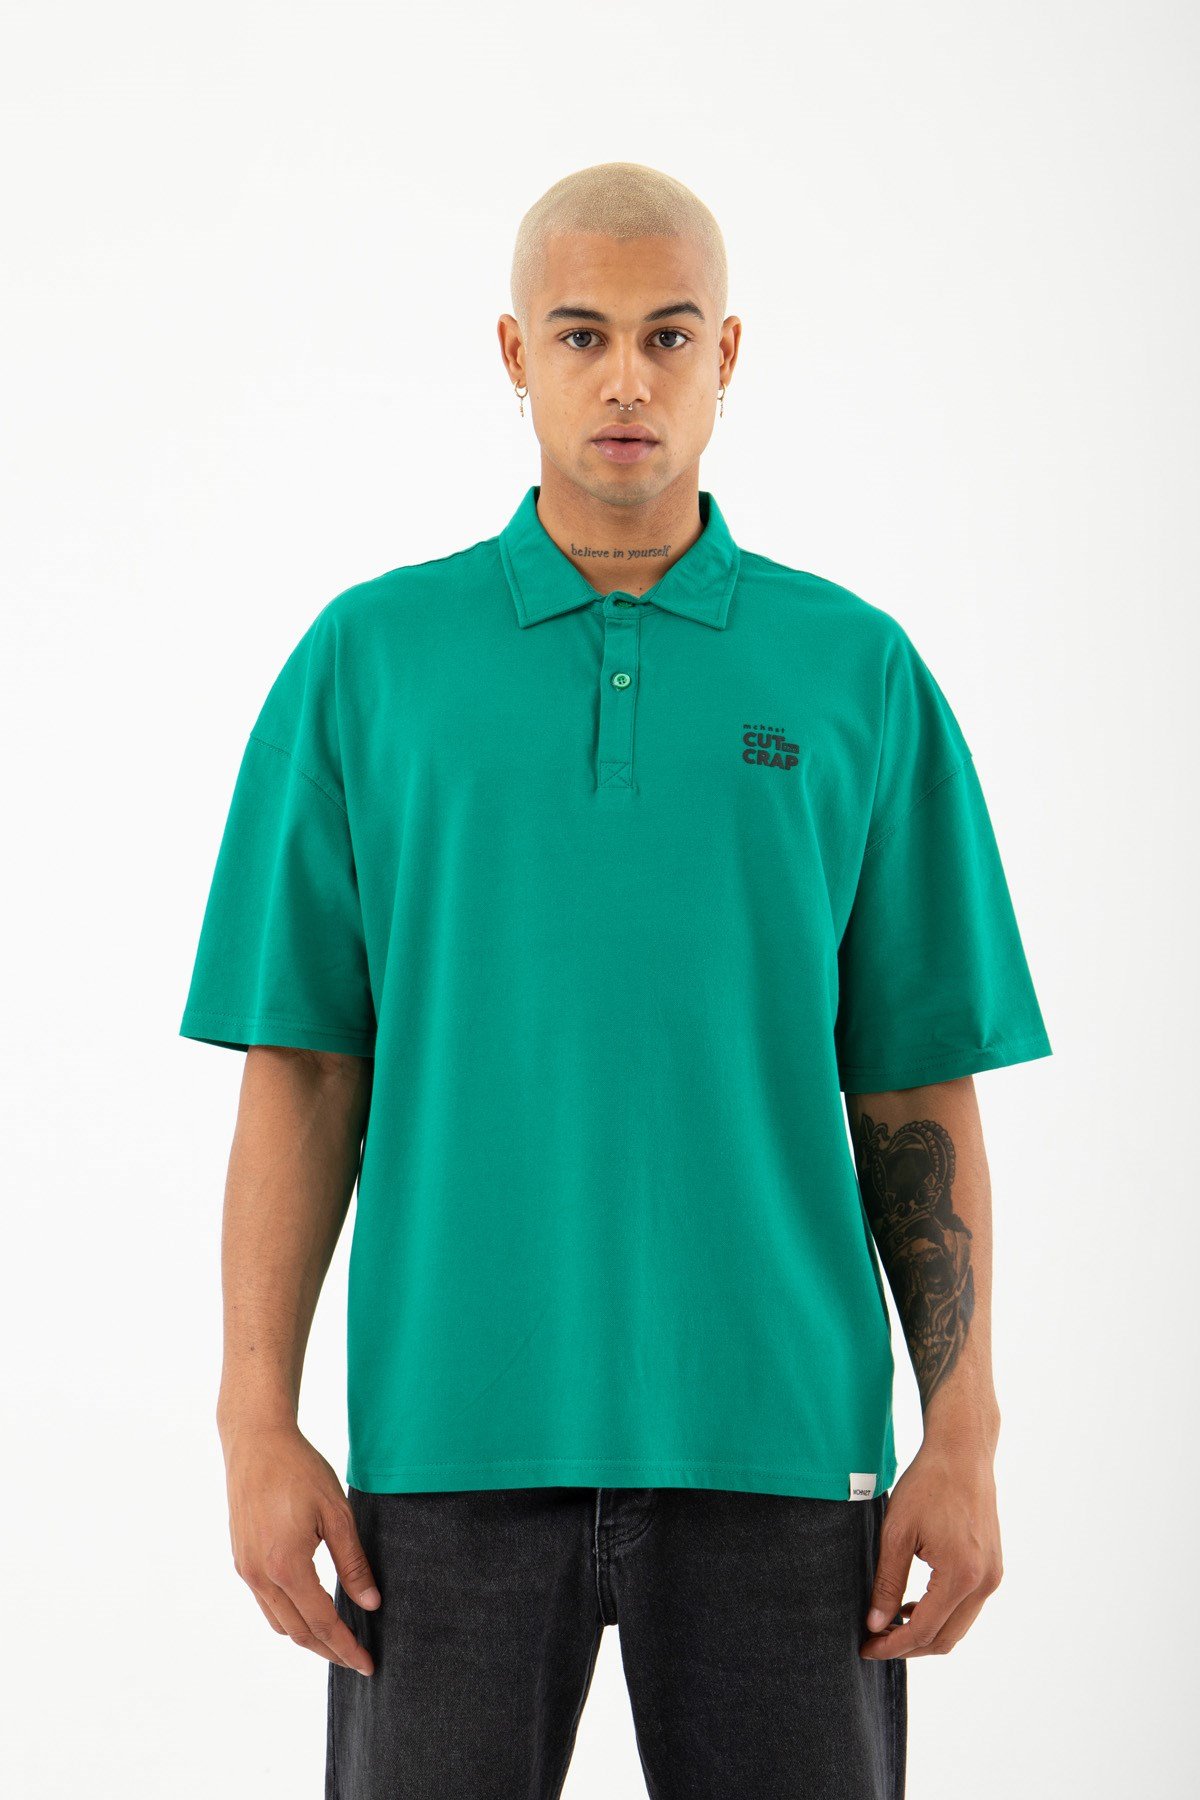 Oversize Cut Thte Crap Polo Shirt T-Shirt Benetton